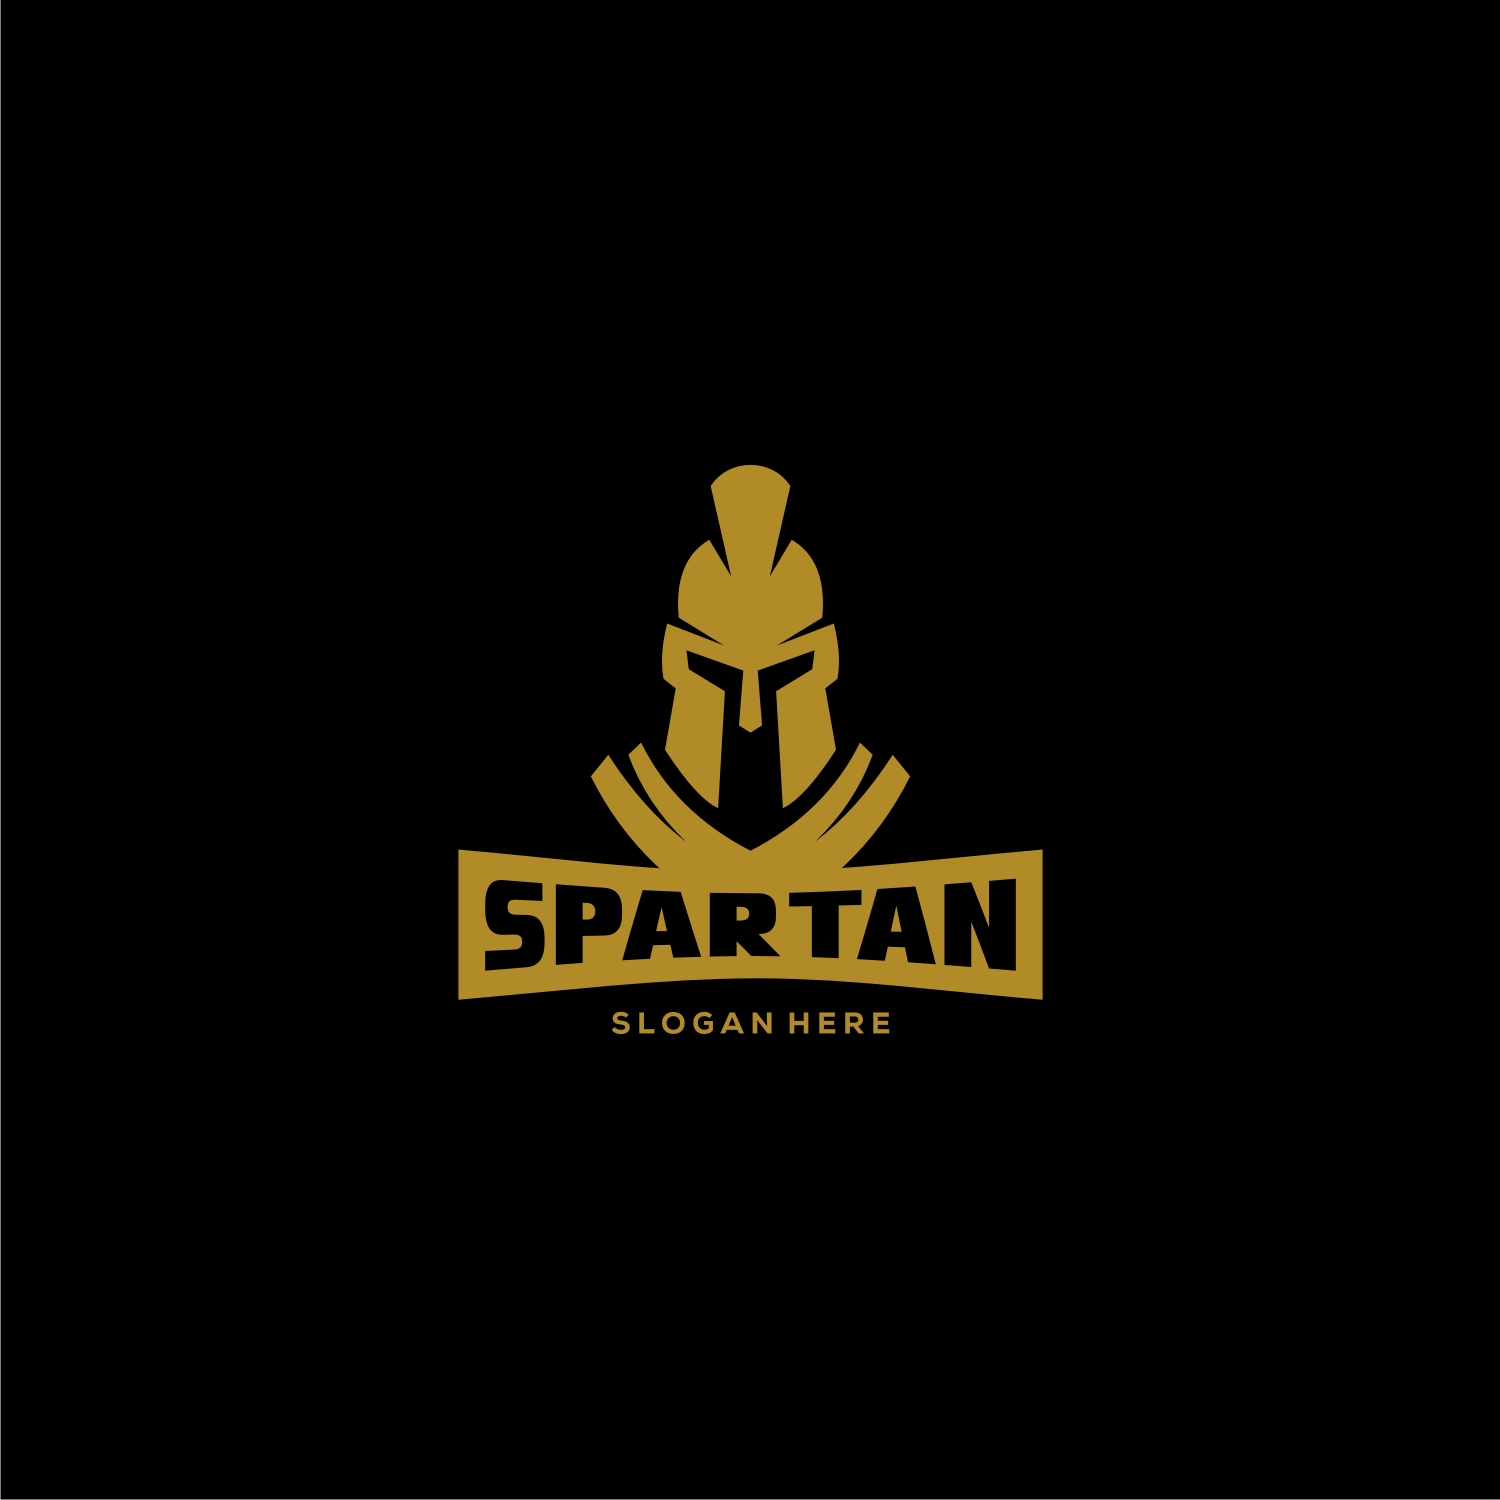 Spartan Logo and Vector Design Helmet and Head.